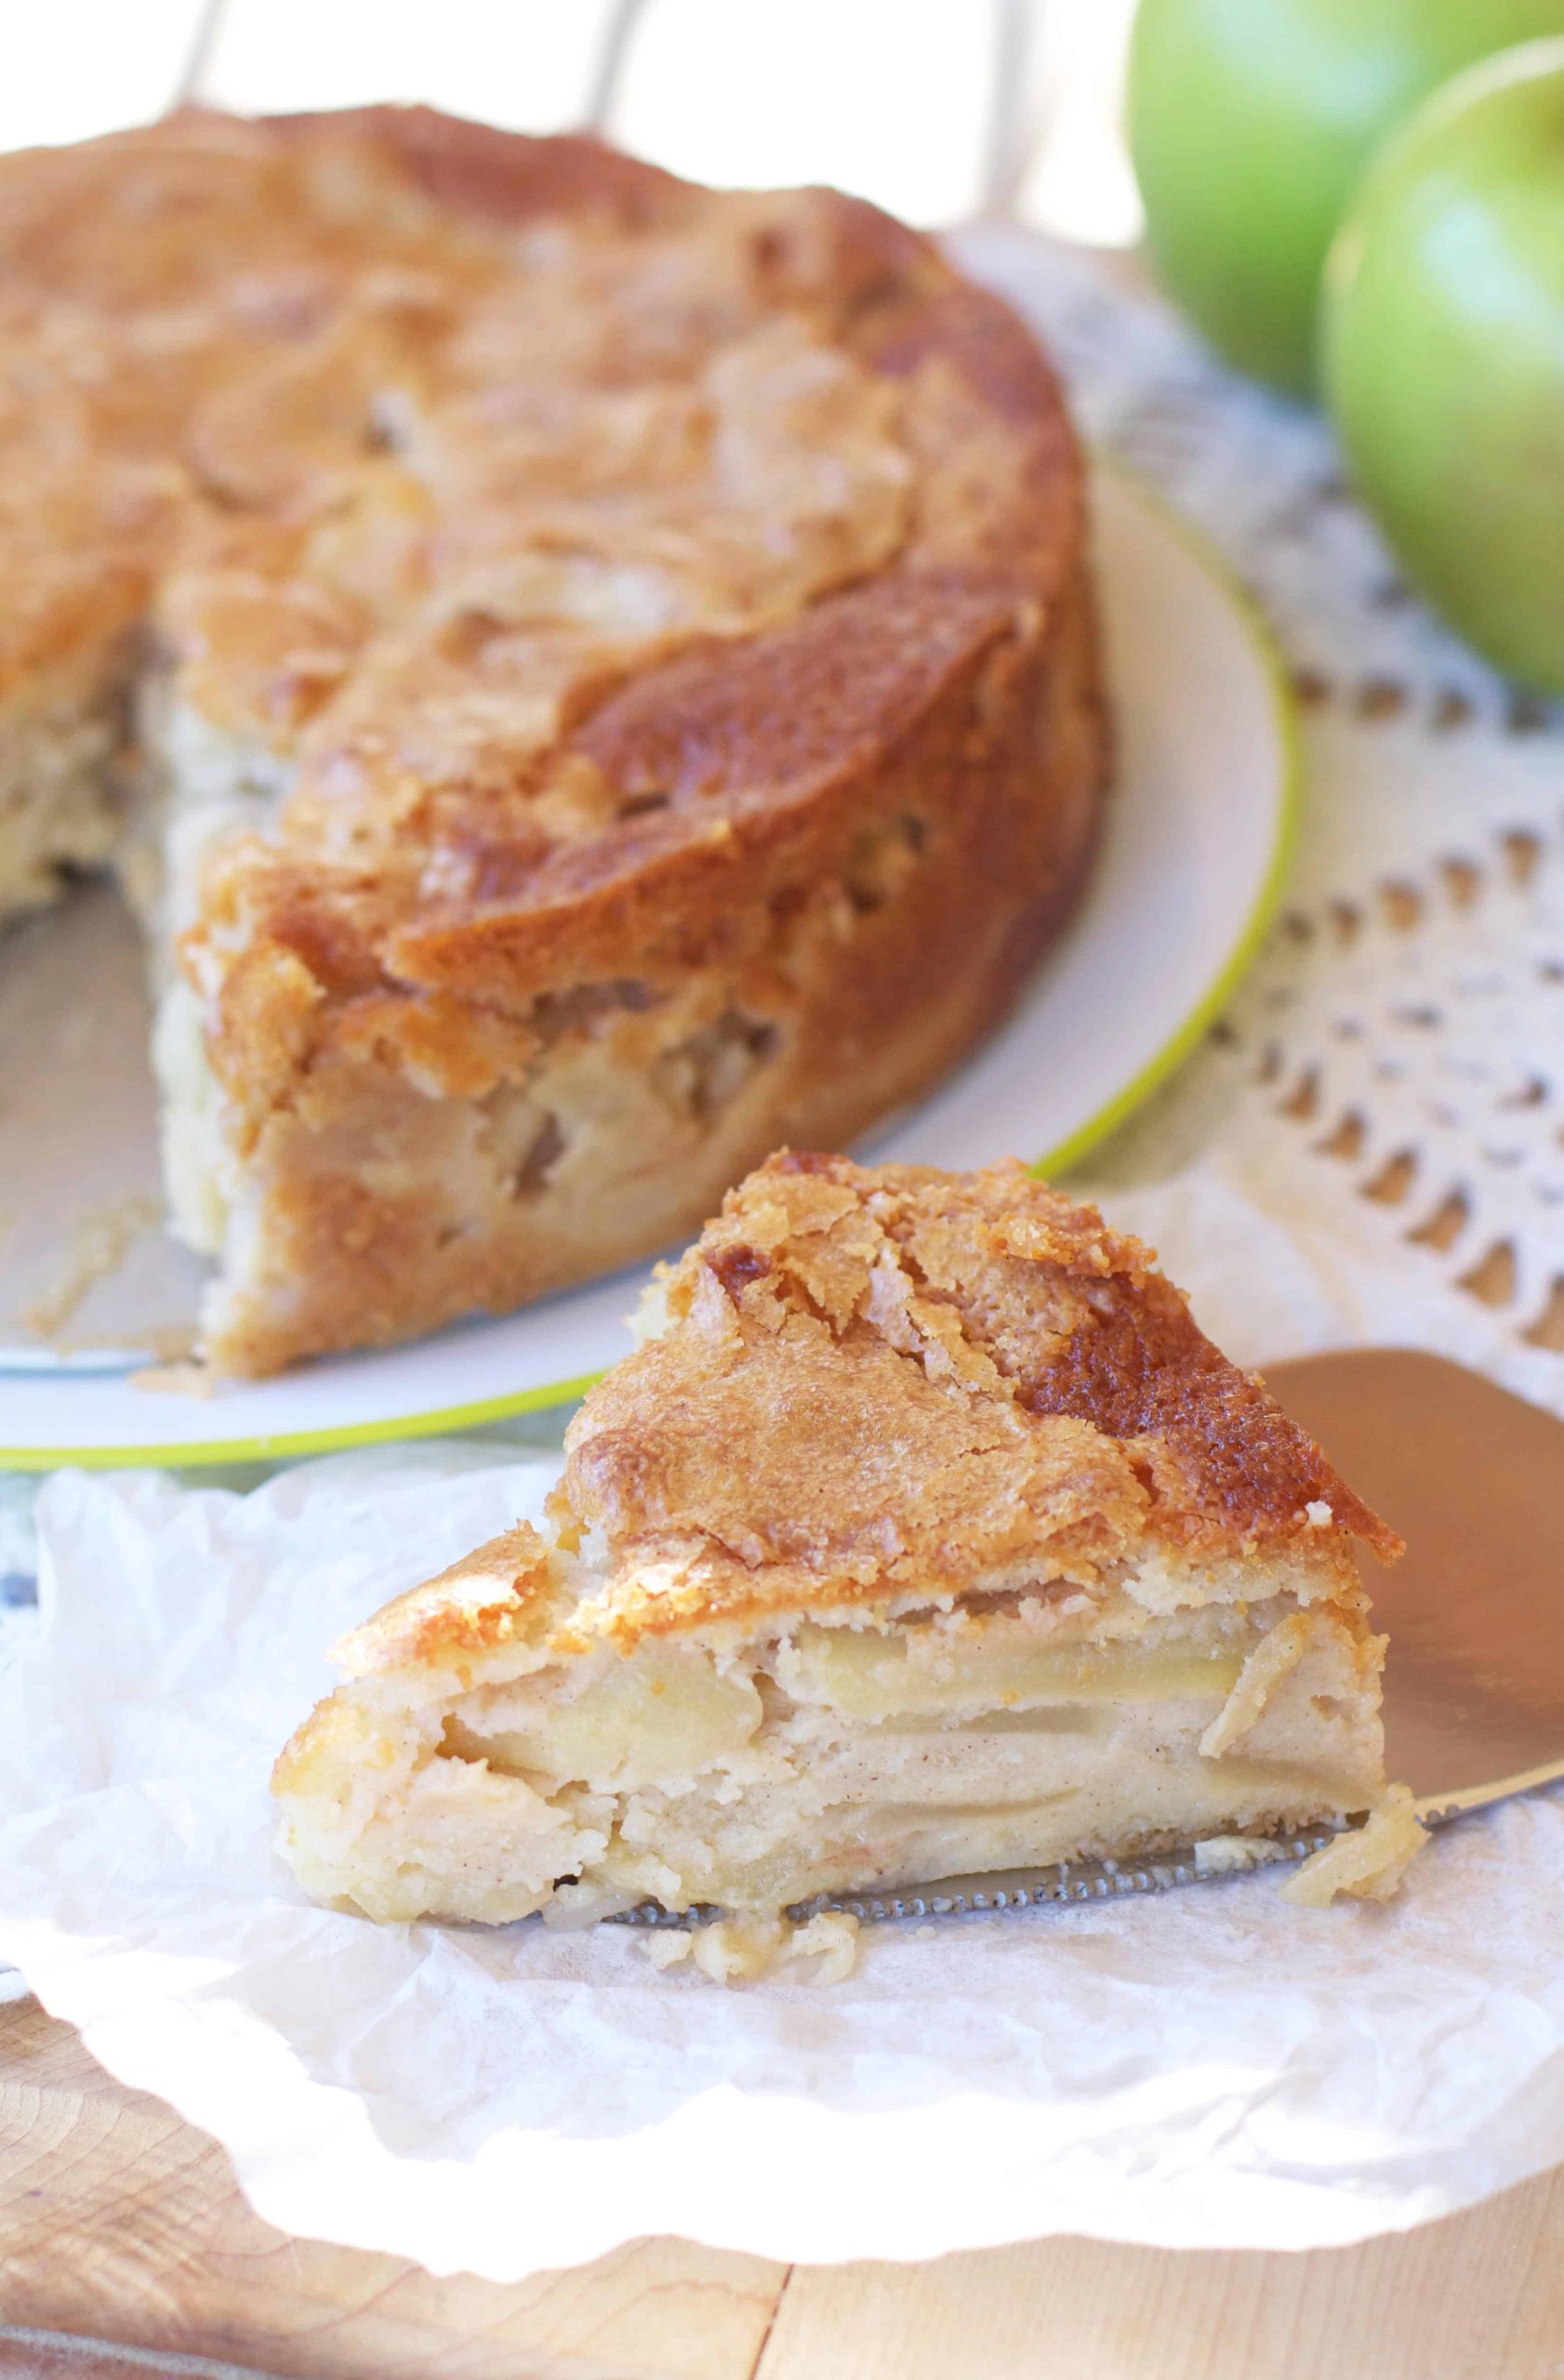 Apple and custard cake recipe